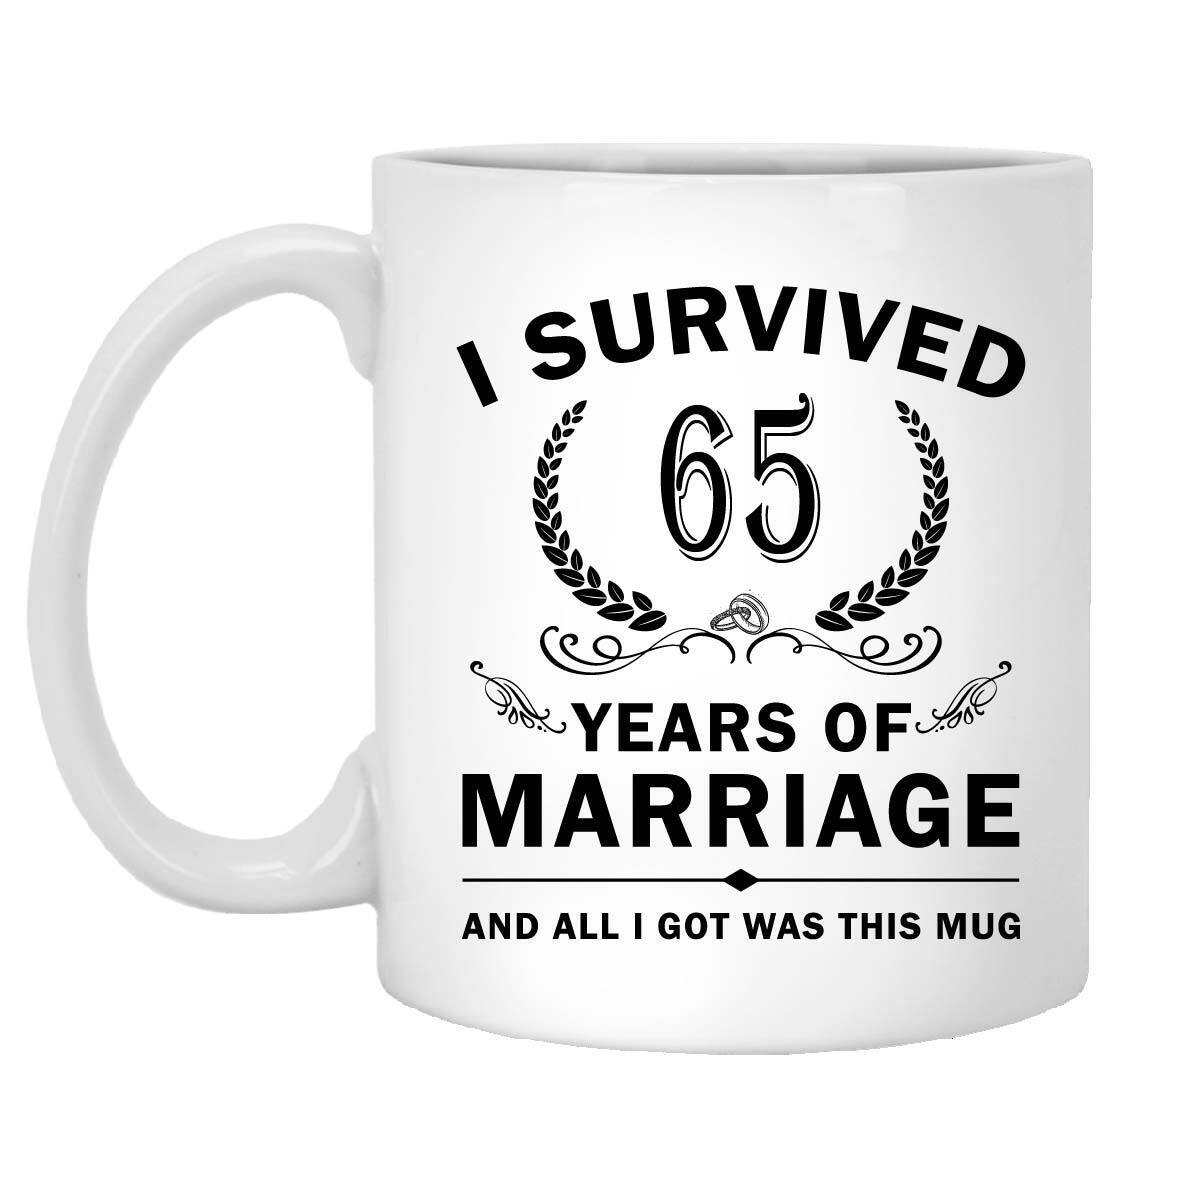 65 Years of Marriage 65th Wedding Anniversary Mugs for Couple Husband Wife MUG